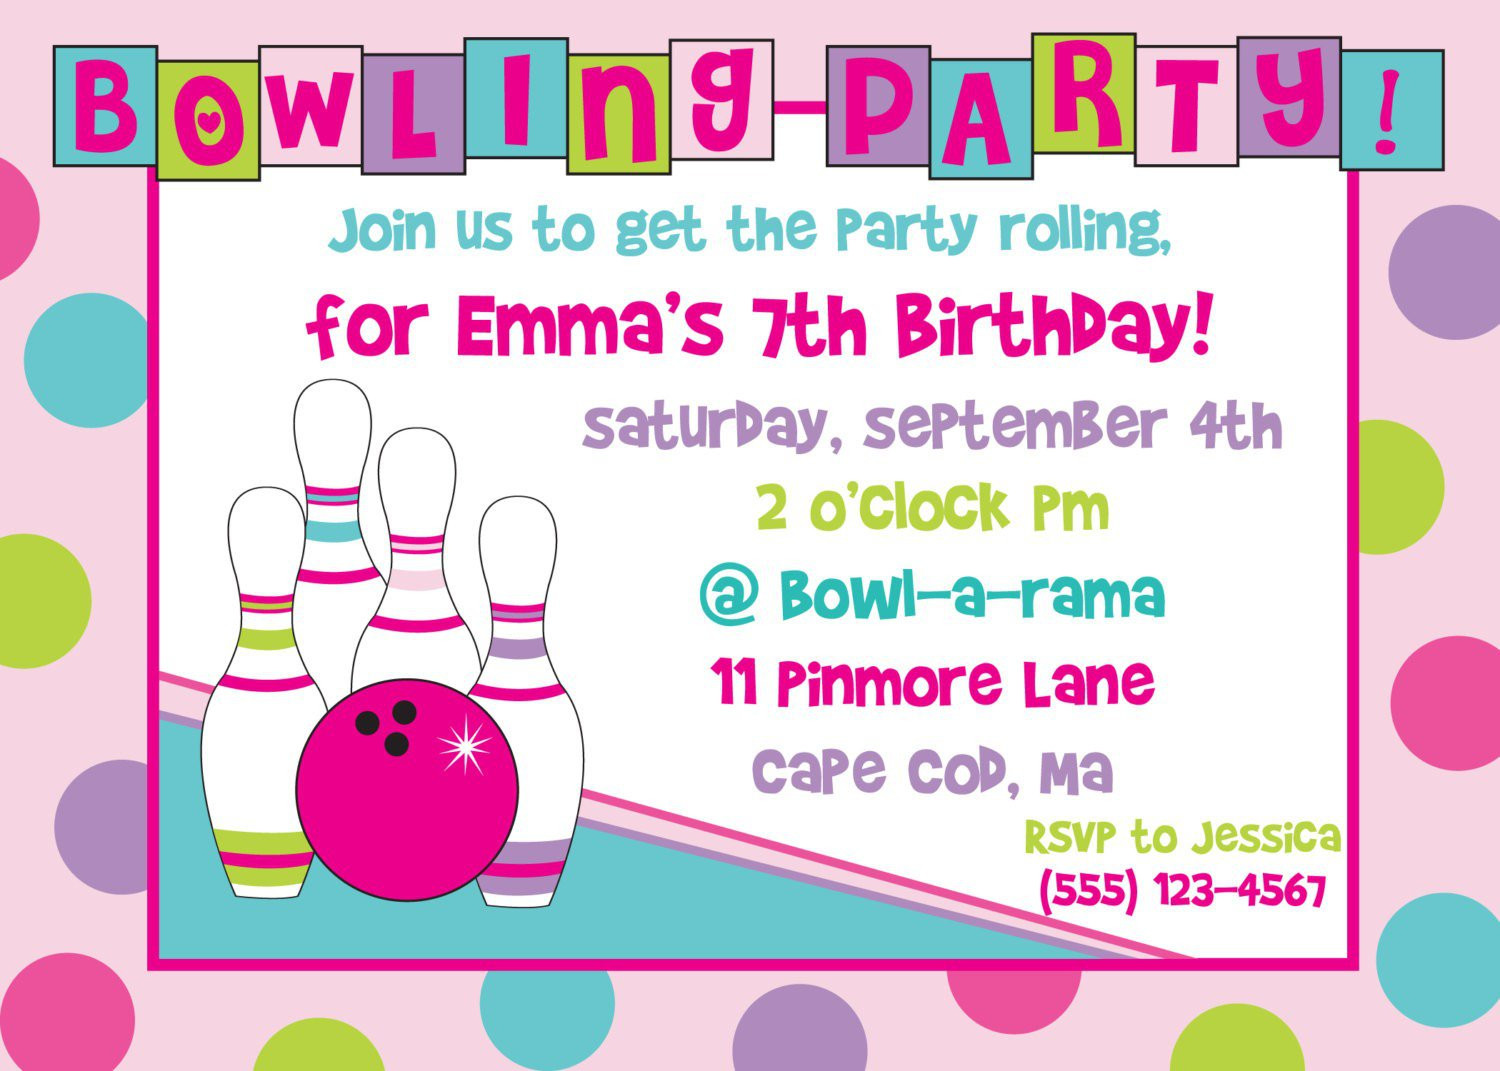 Free Printable Bowling Birthday Party Invitations
 Bowling Birthday Party Invitations Free Templates